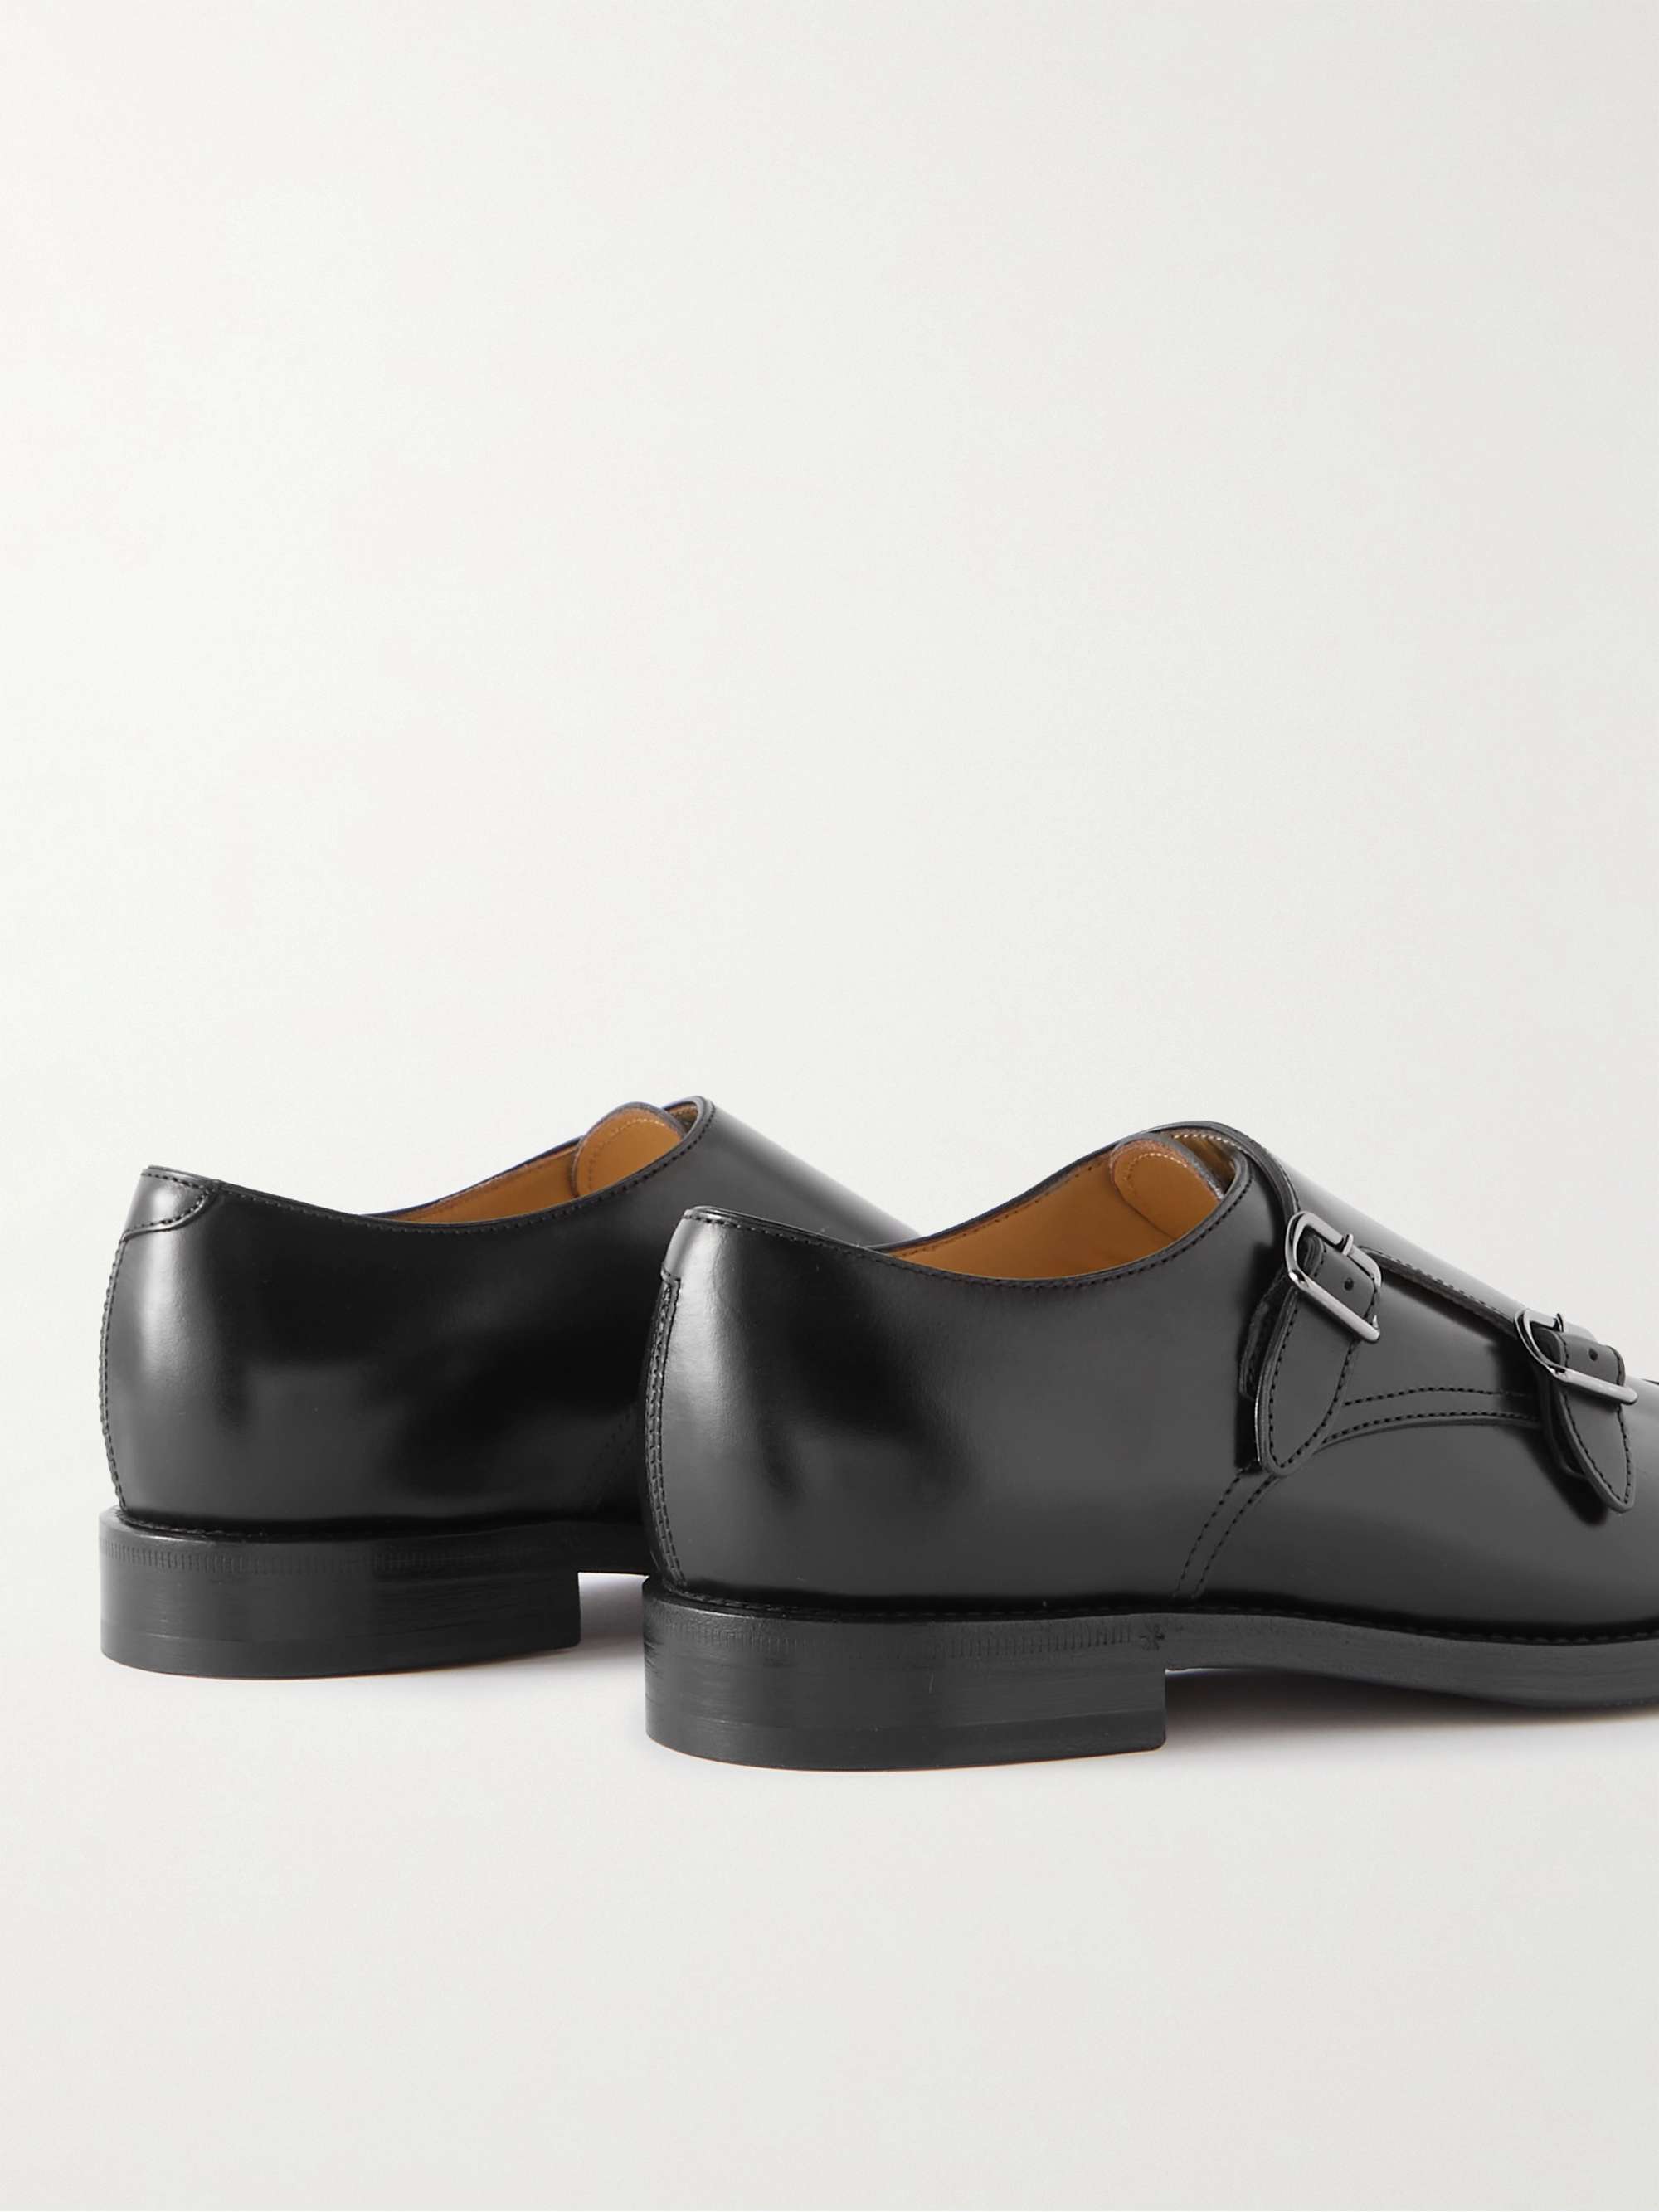 BRUNELLO CUCINELLI Leather Monk-Strap Shoes